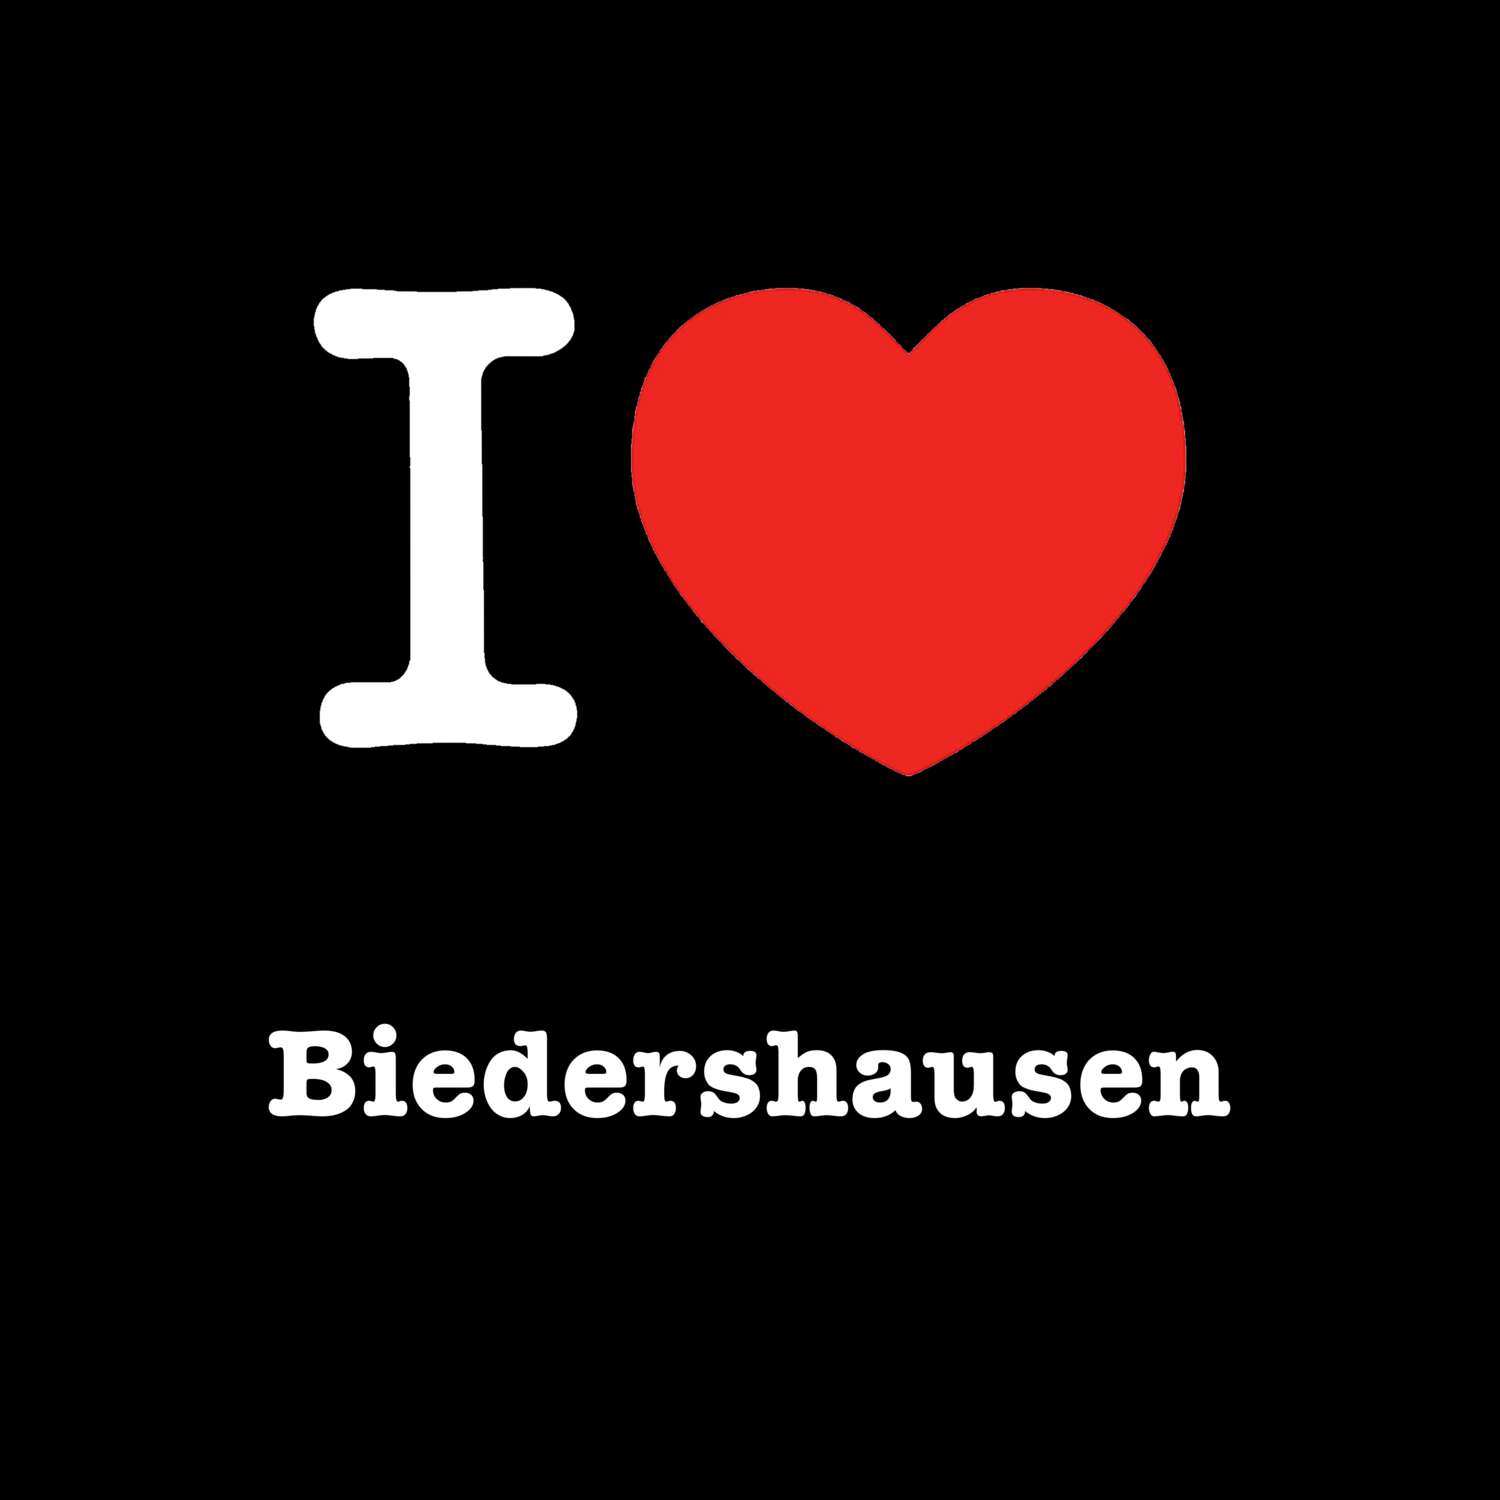 Biedershausen T-Shirt »I love«